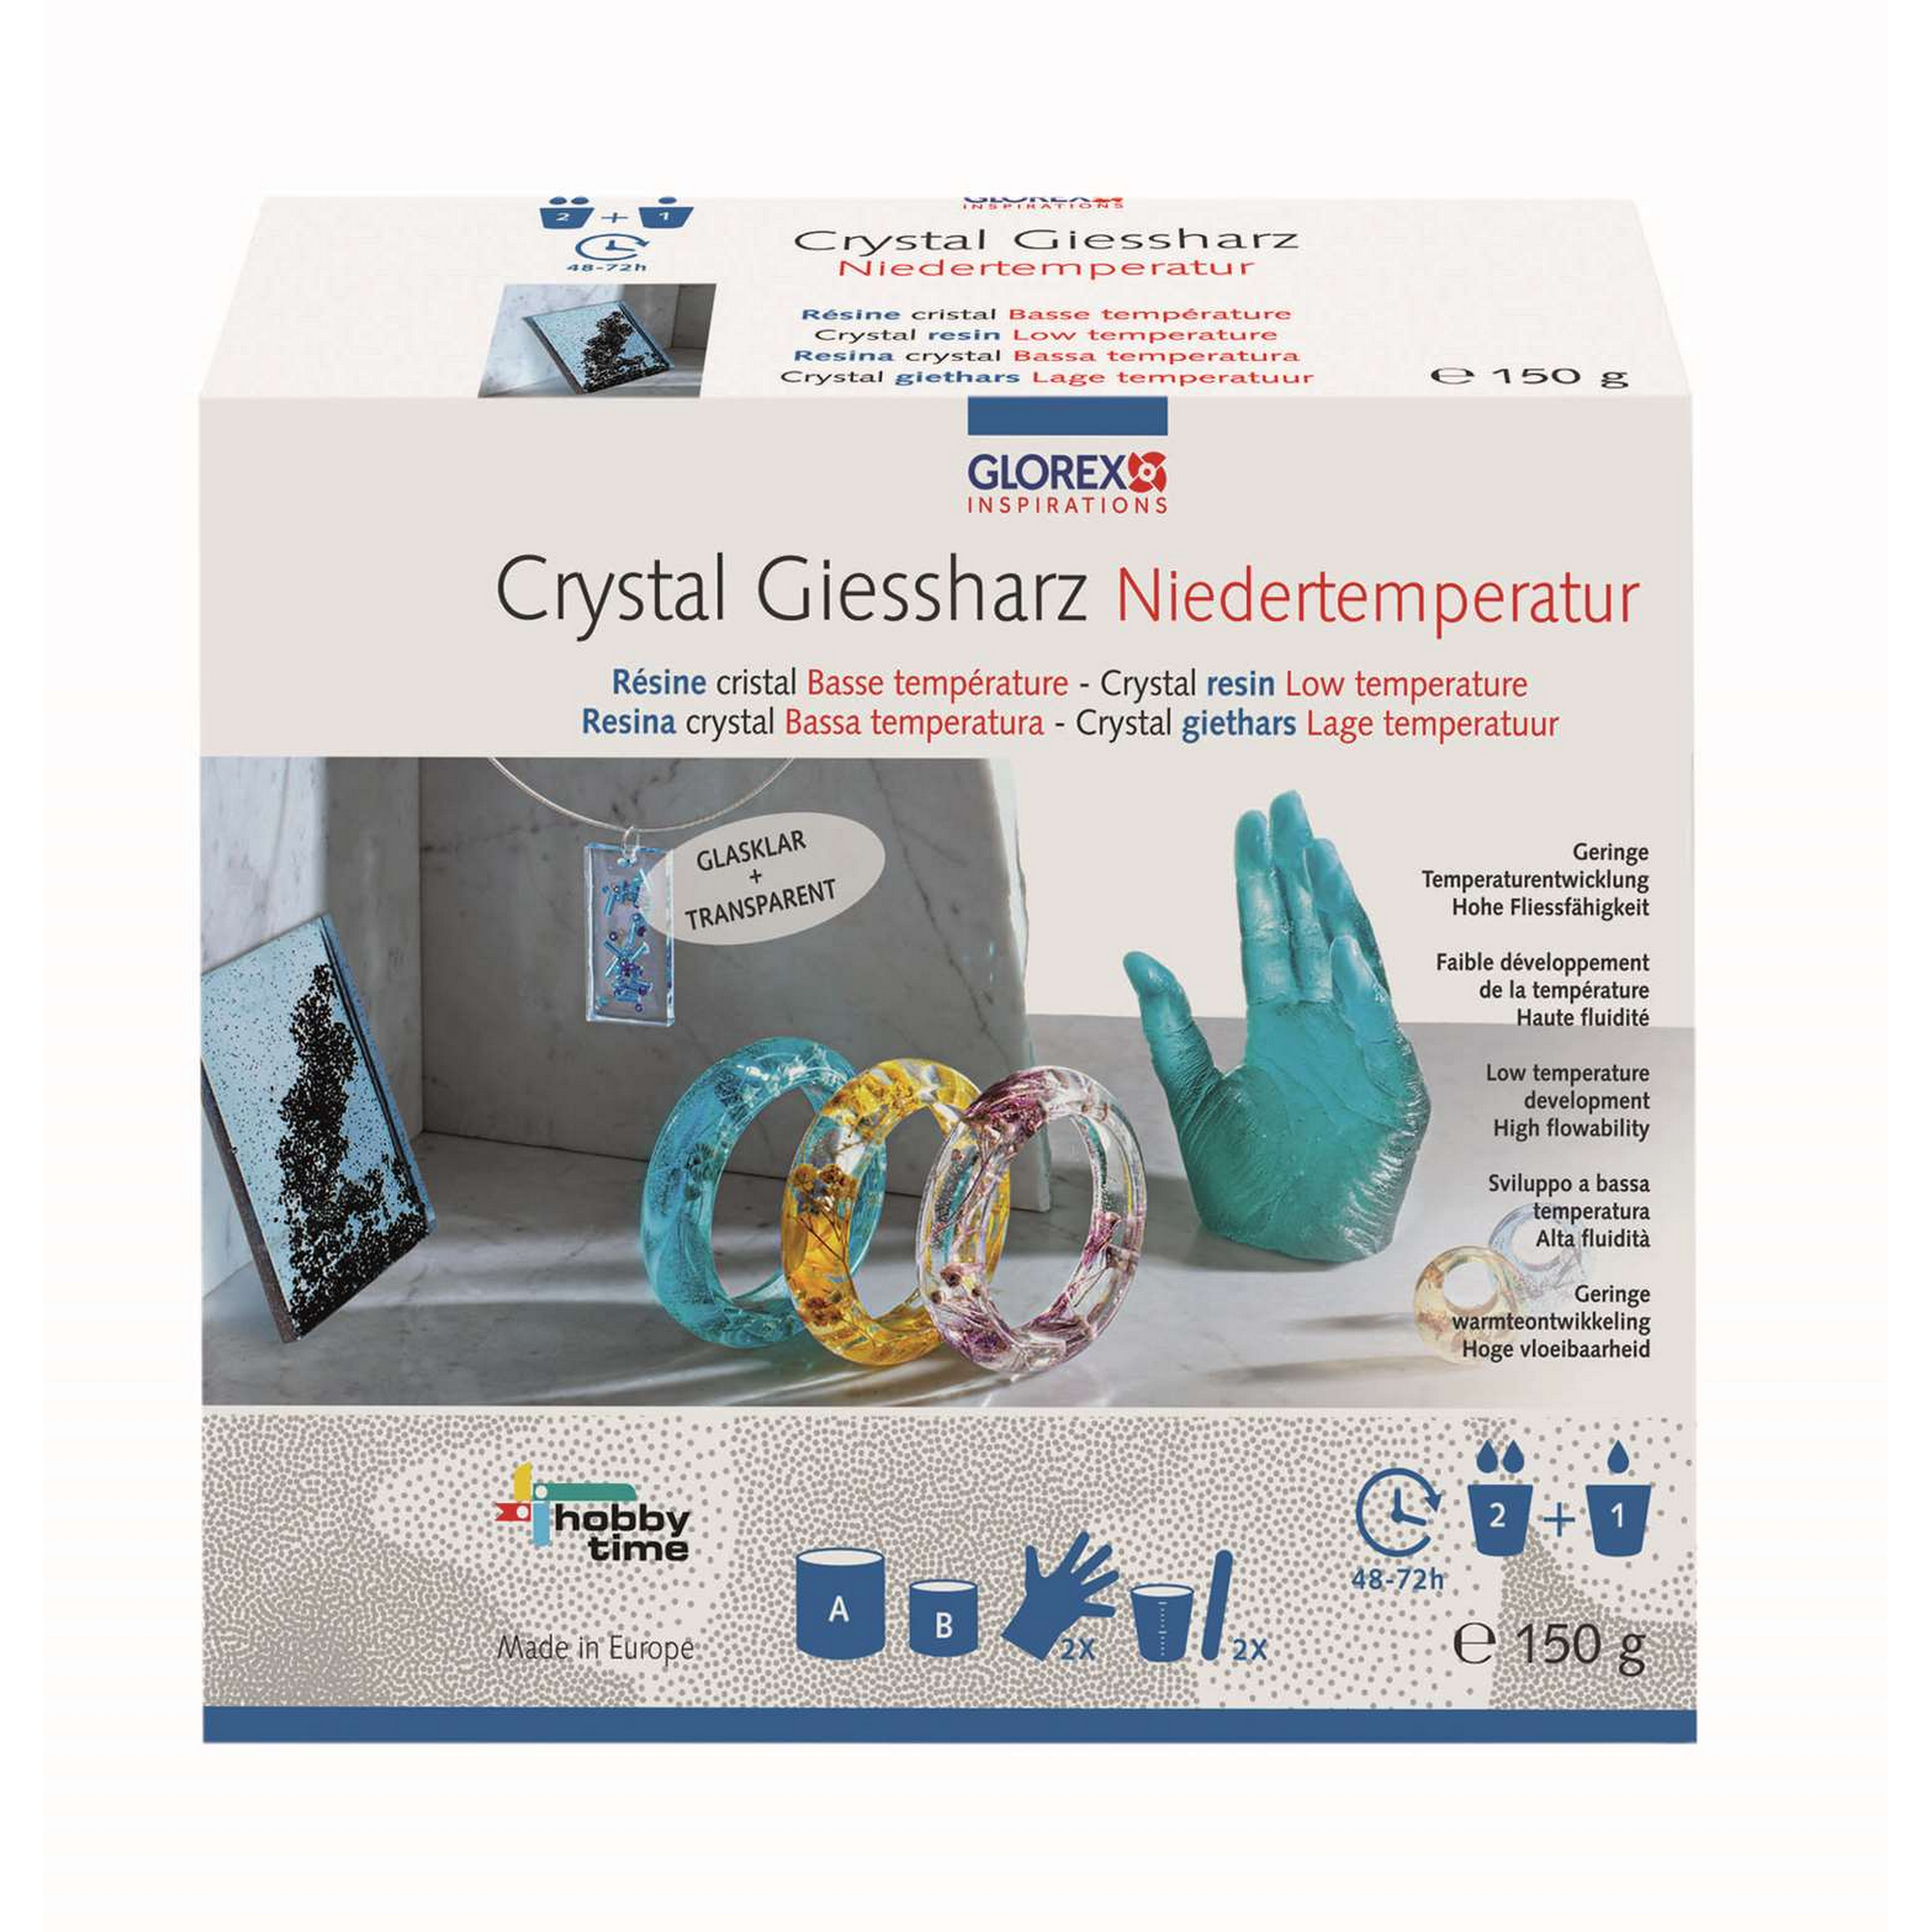 Gießharz 'Crystal' Niedertemperatur 150 g + product picture